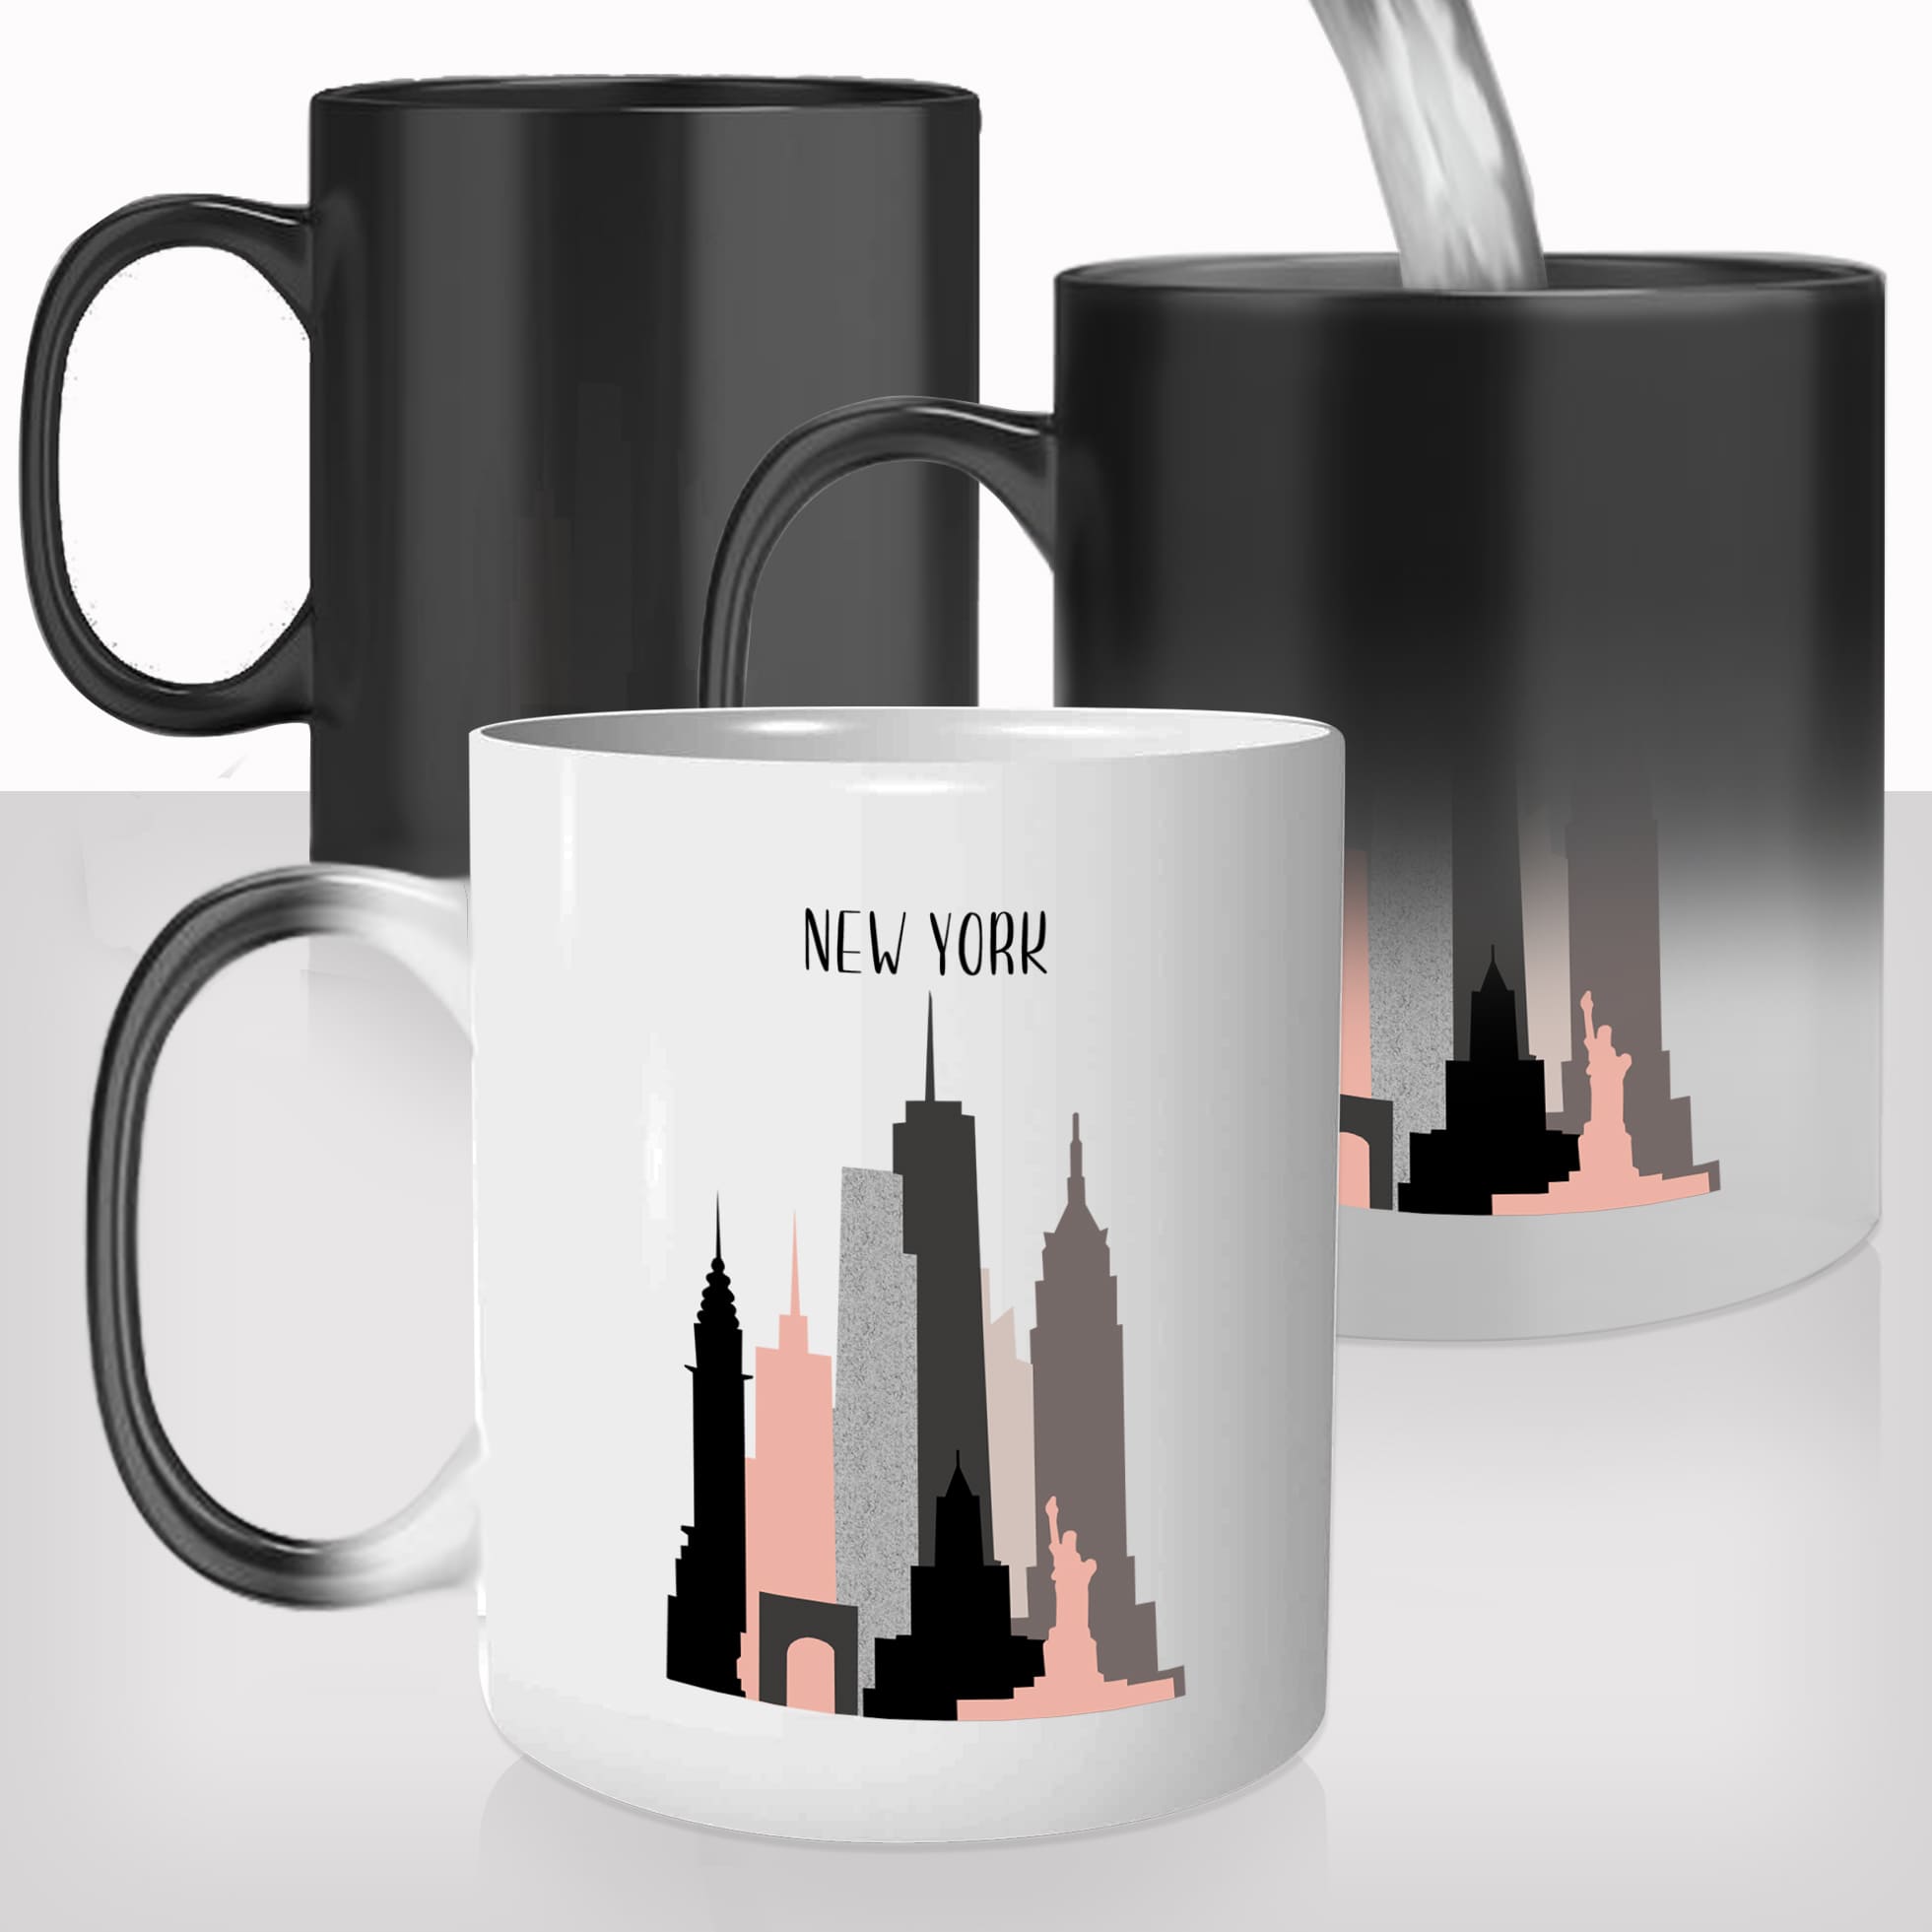 mug-magique-tasse-magic-thermo-reactif-chauffant-new-york-prenom-personnalisé-etats-unis-original-voyage-vacances-fun-cadeau-offrir